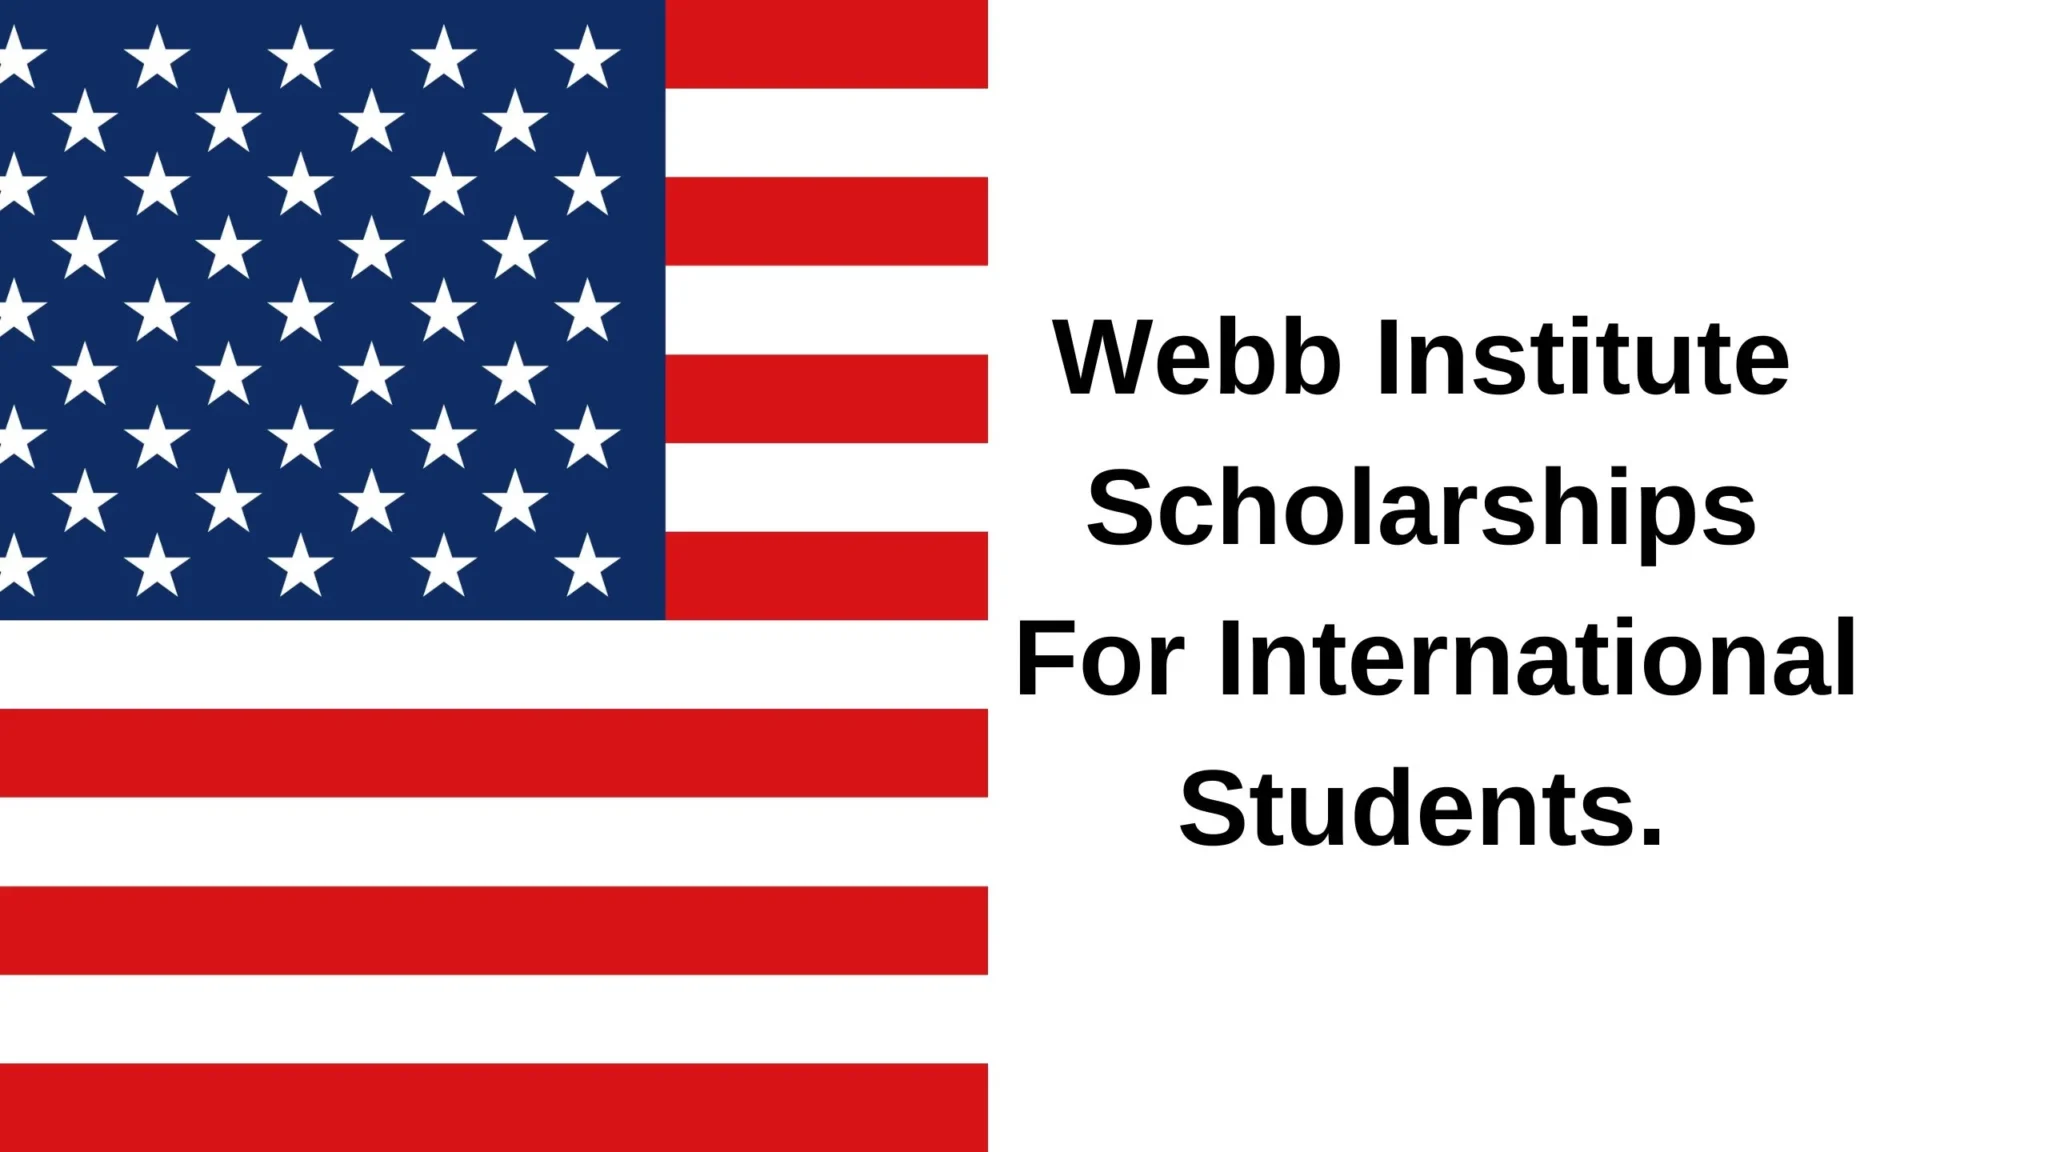 Webb Institute Scholarships For International Students. (1)